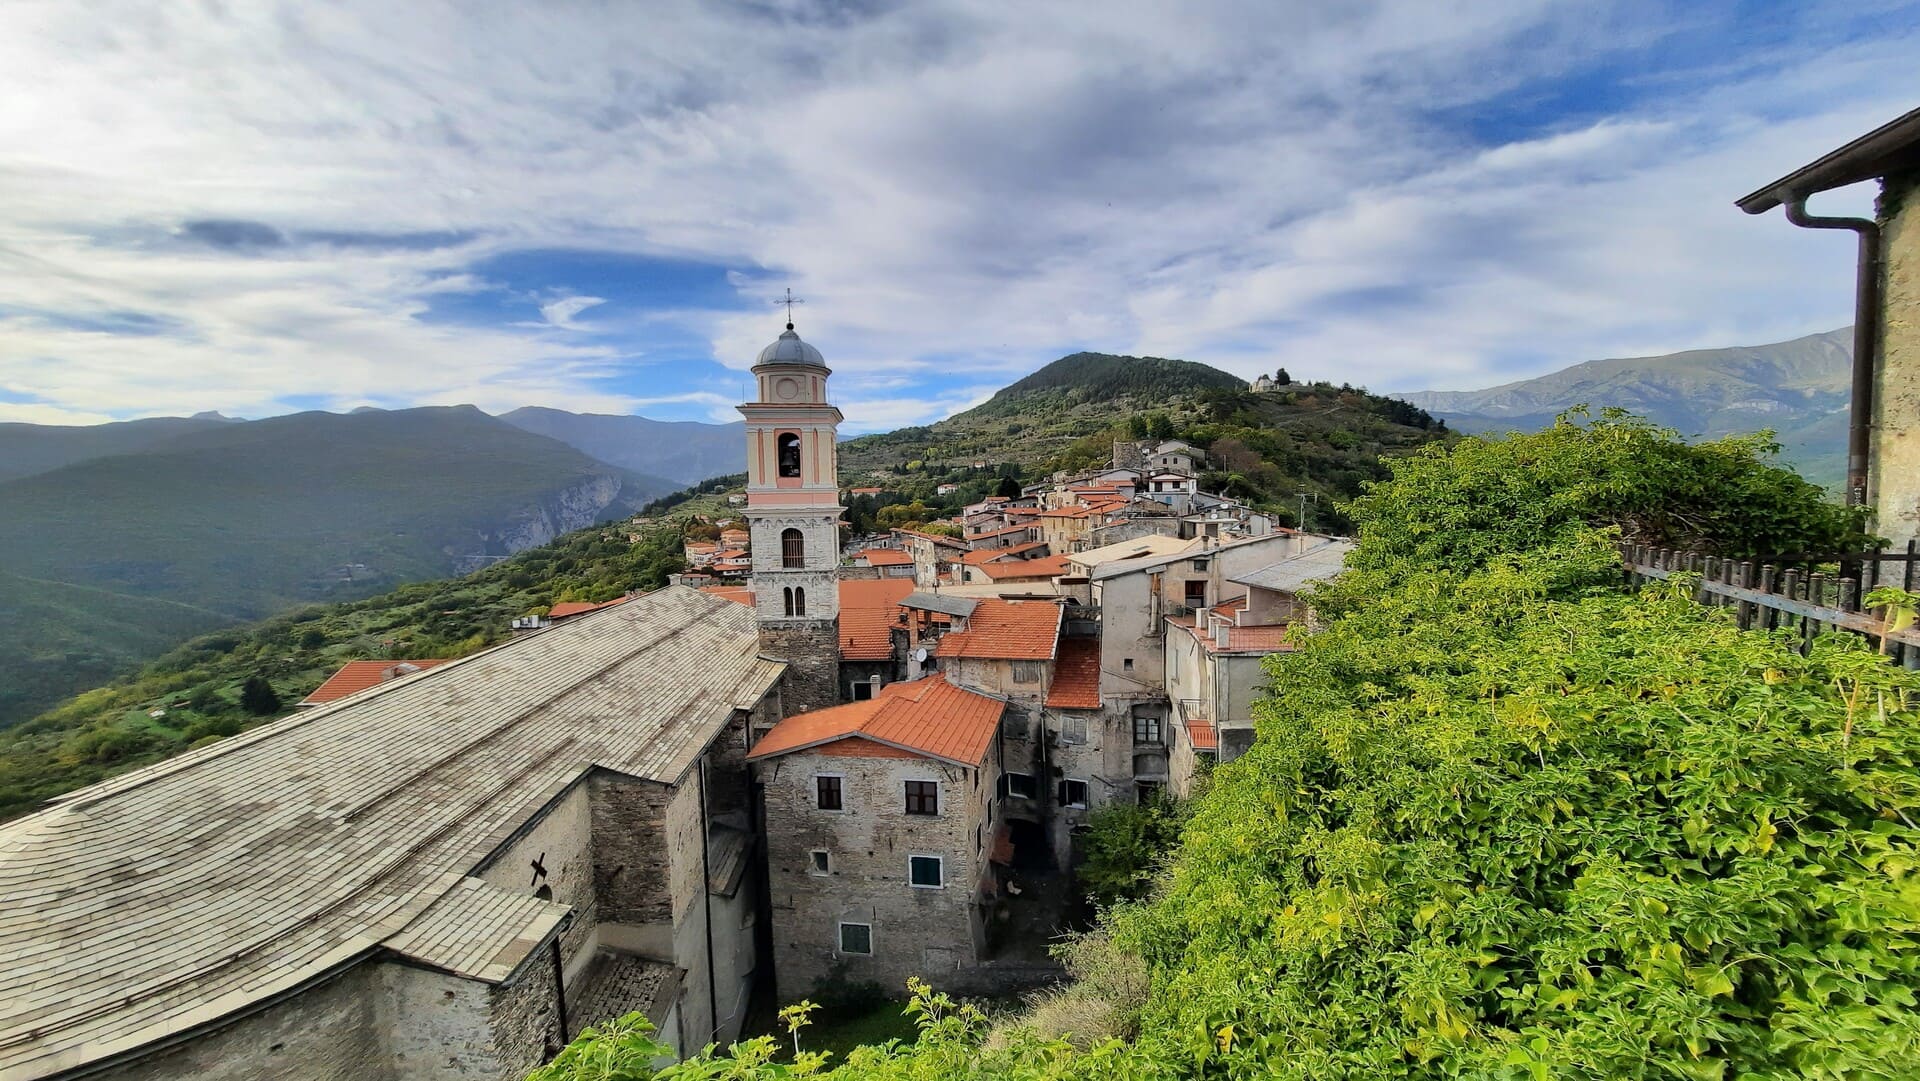 The panorama over the village of Triora from San Dalmazzo